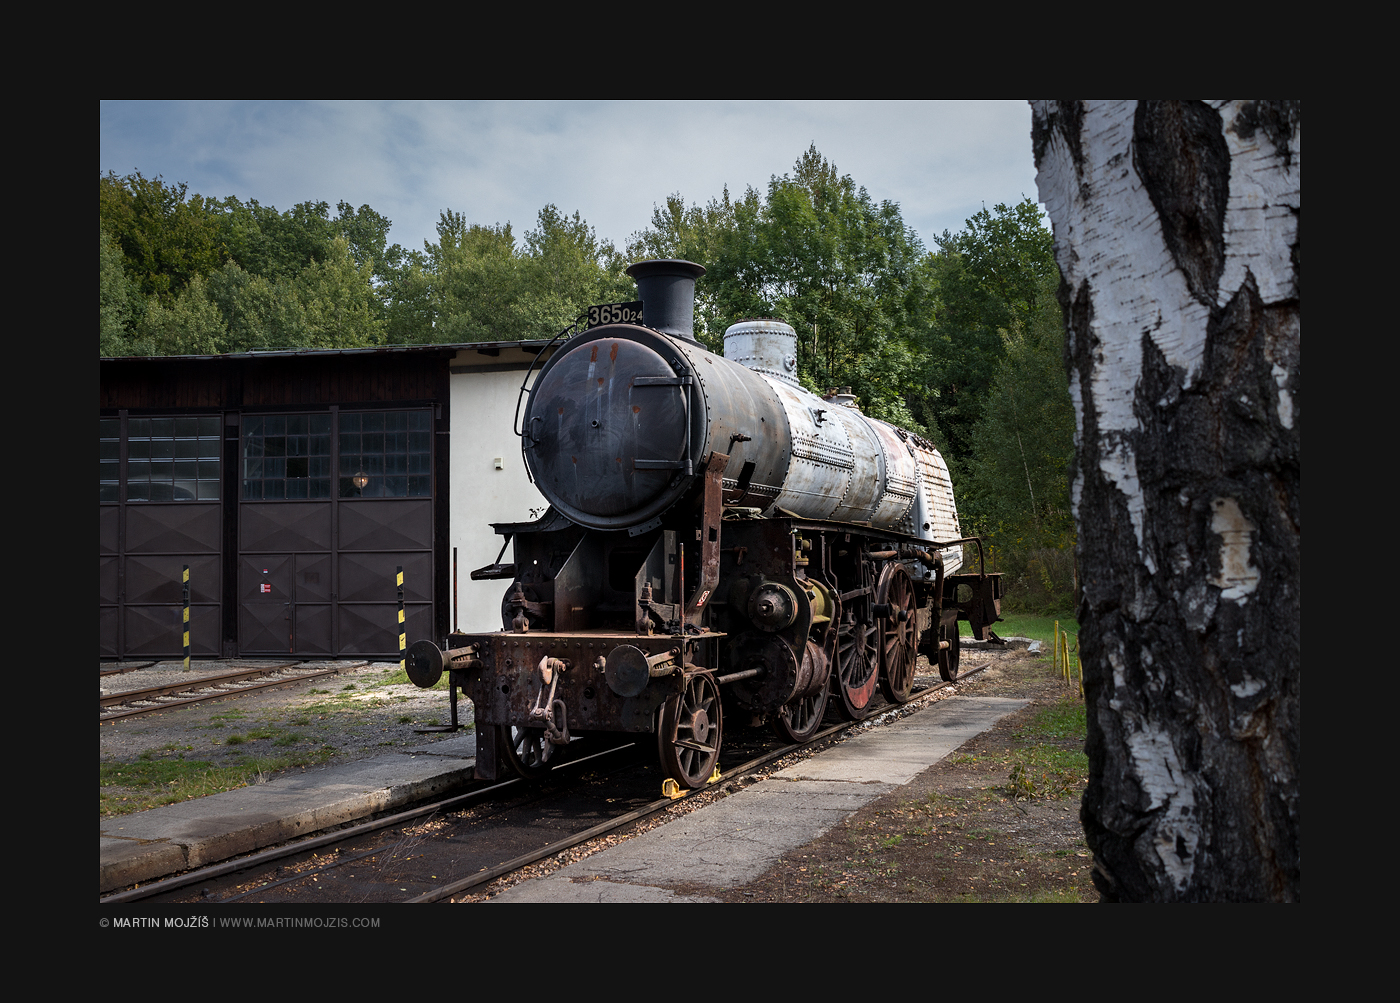 Steam locomotive 365 024 is currently being renovated. Railway muzeum in Luzna near Rakovnik.